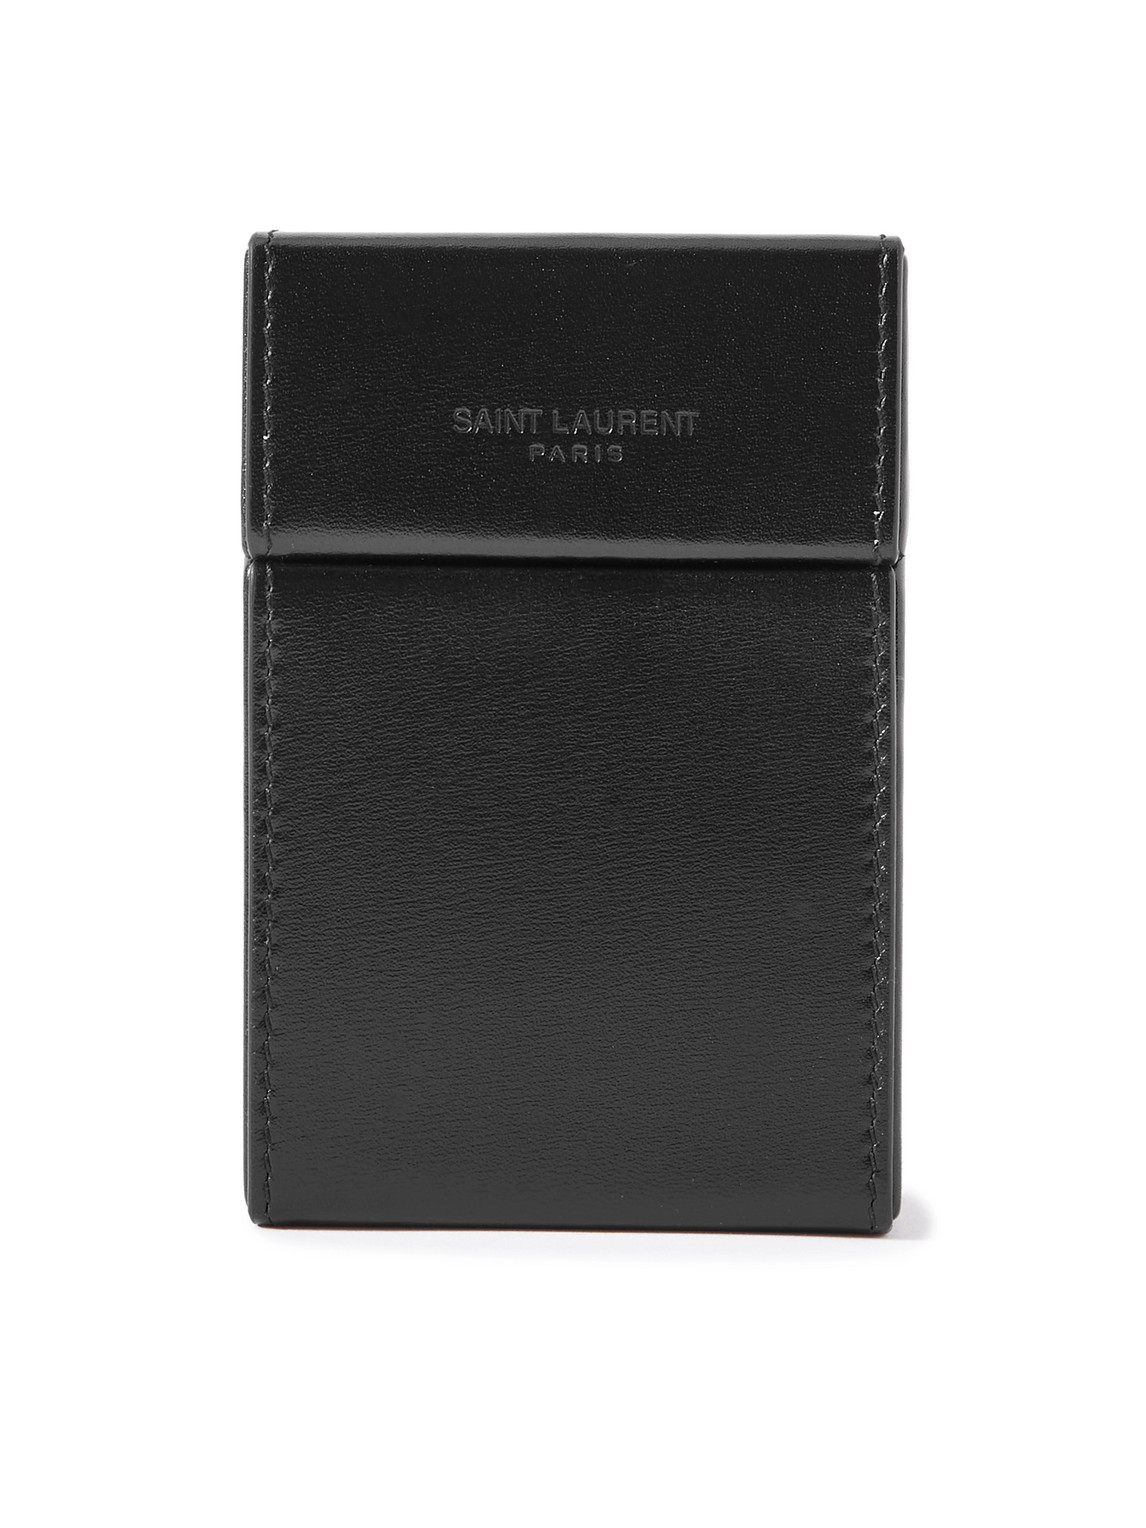 Saint Laurent Leather Pouch In Black